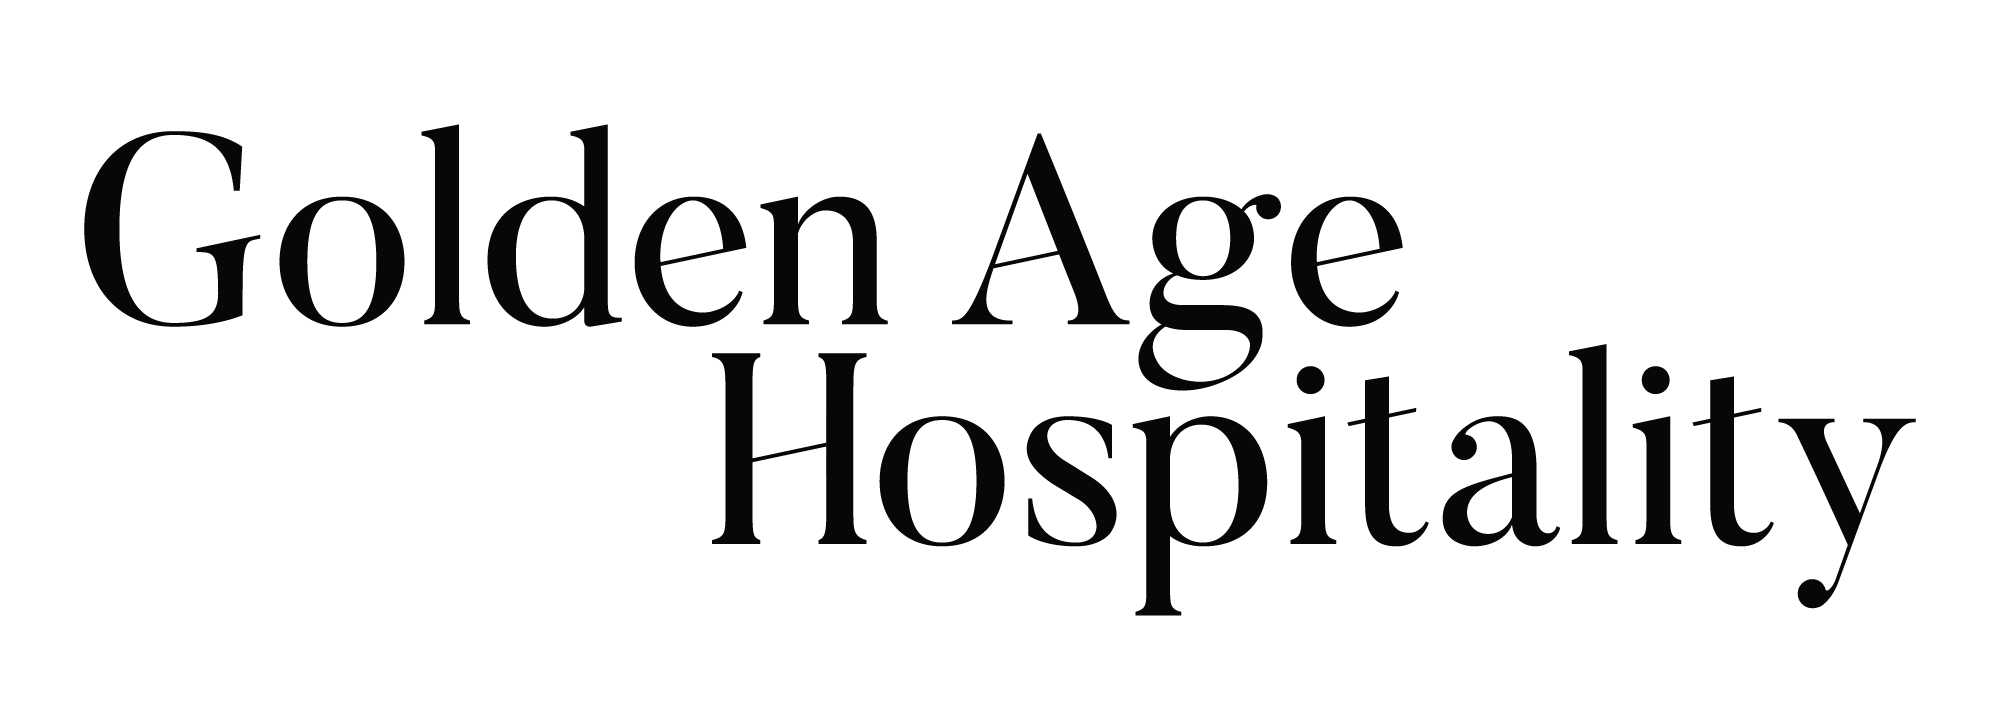 Golden Age mobile logo